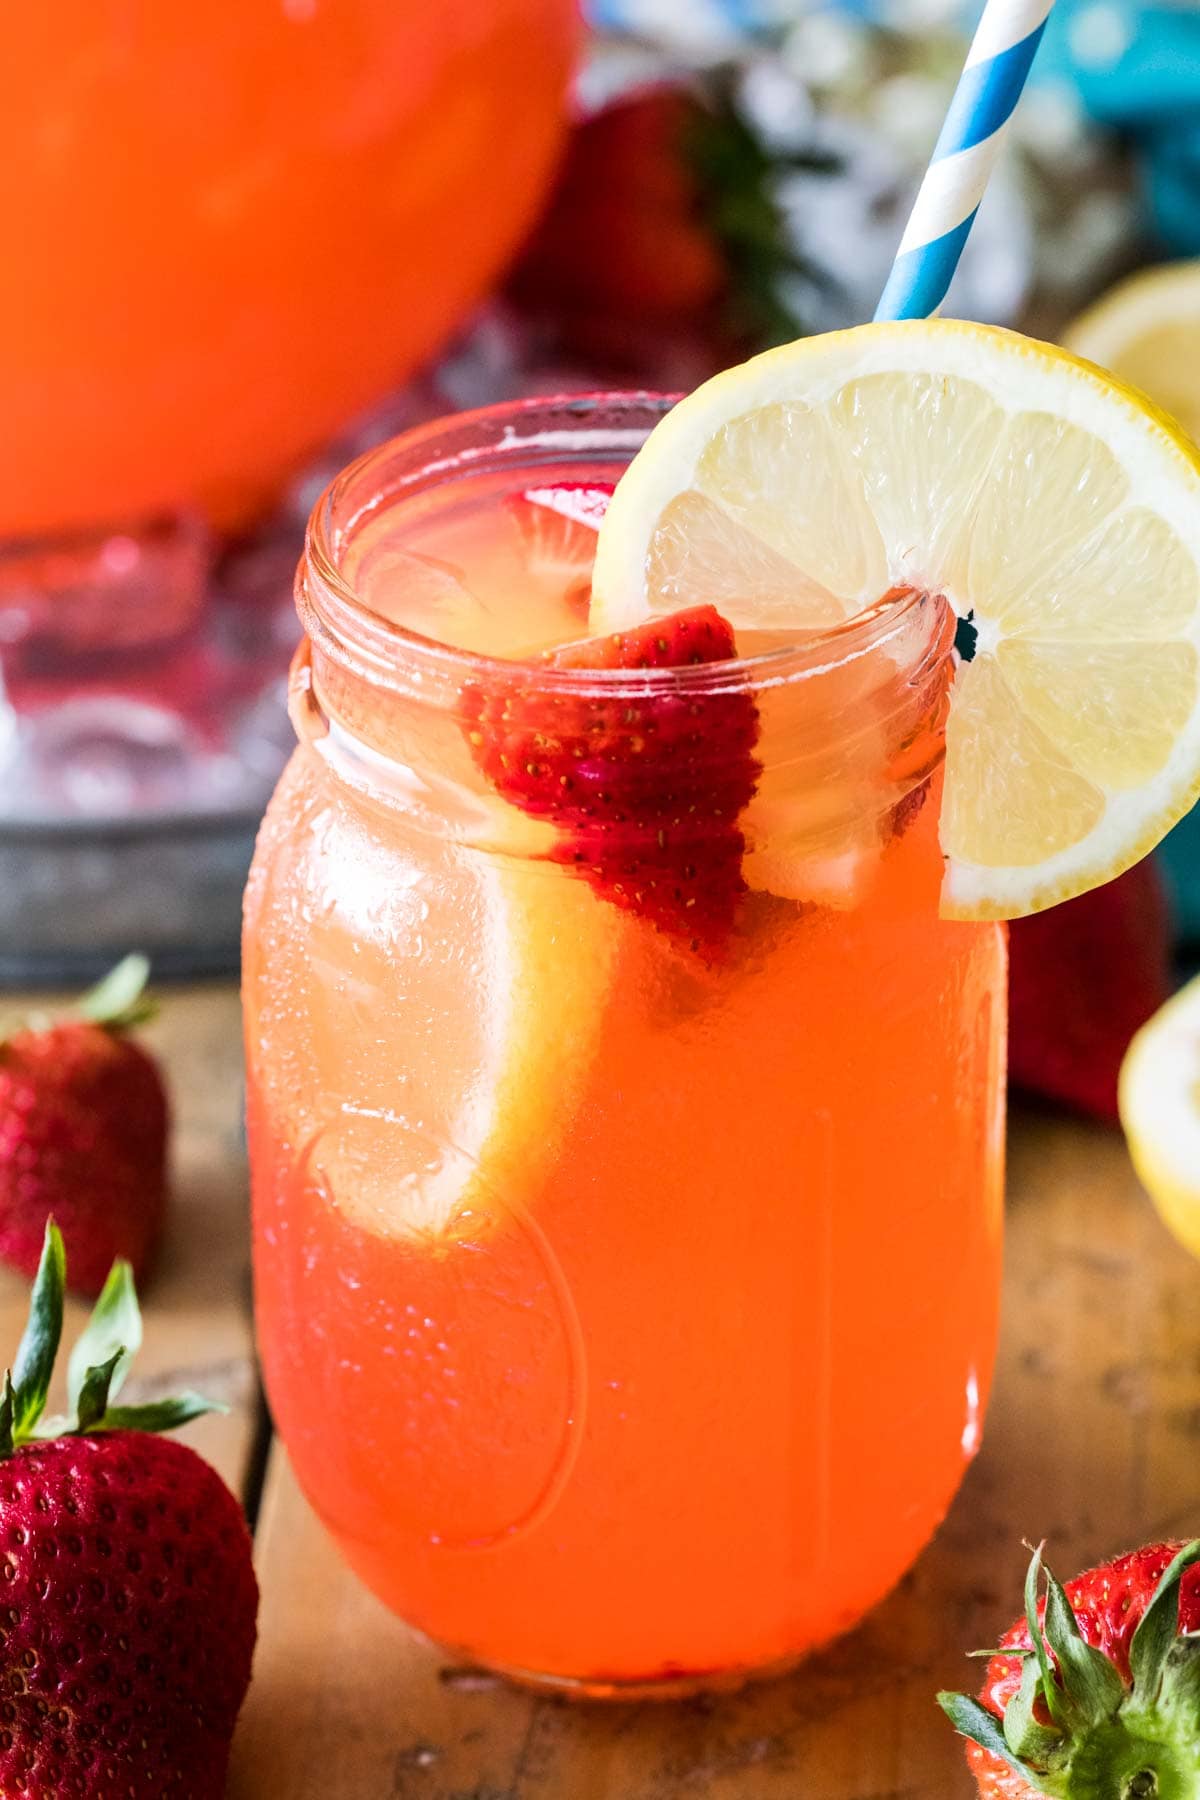 mason jar filled with strawberry flavored lemonade, sliced strawberries, and lemon slices